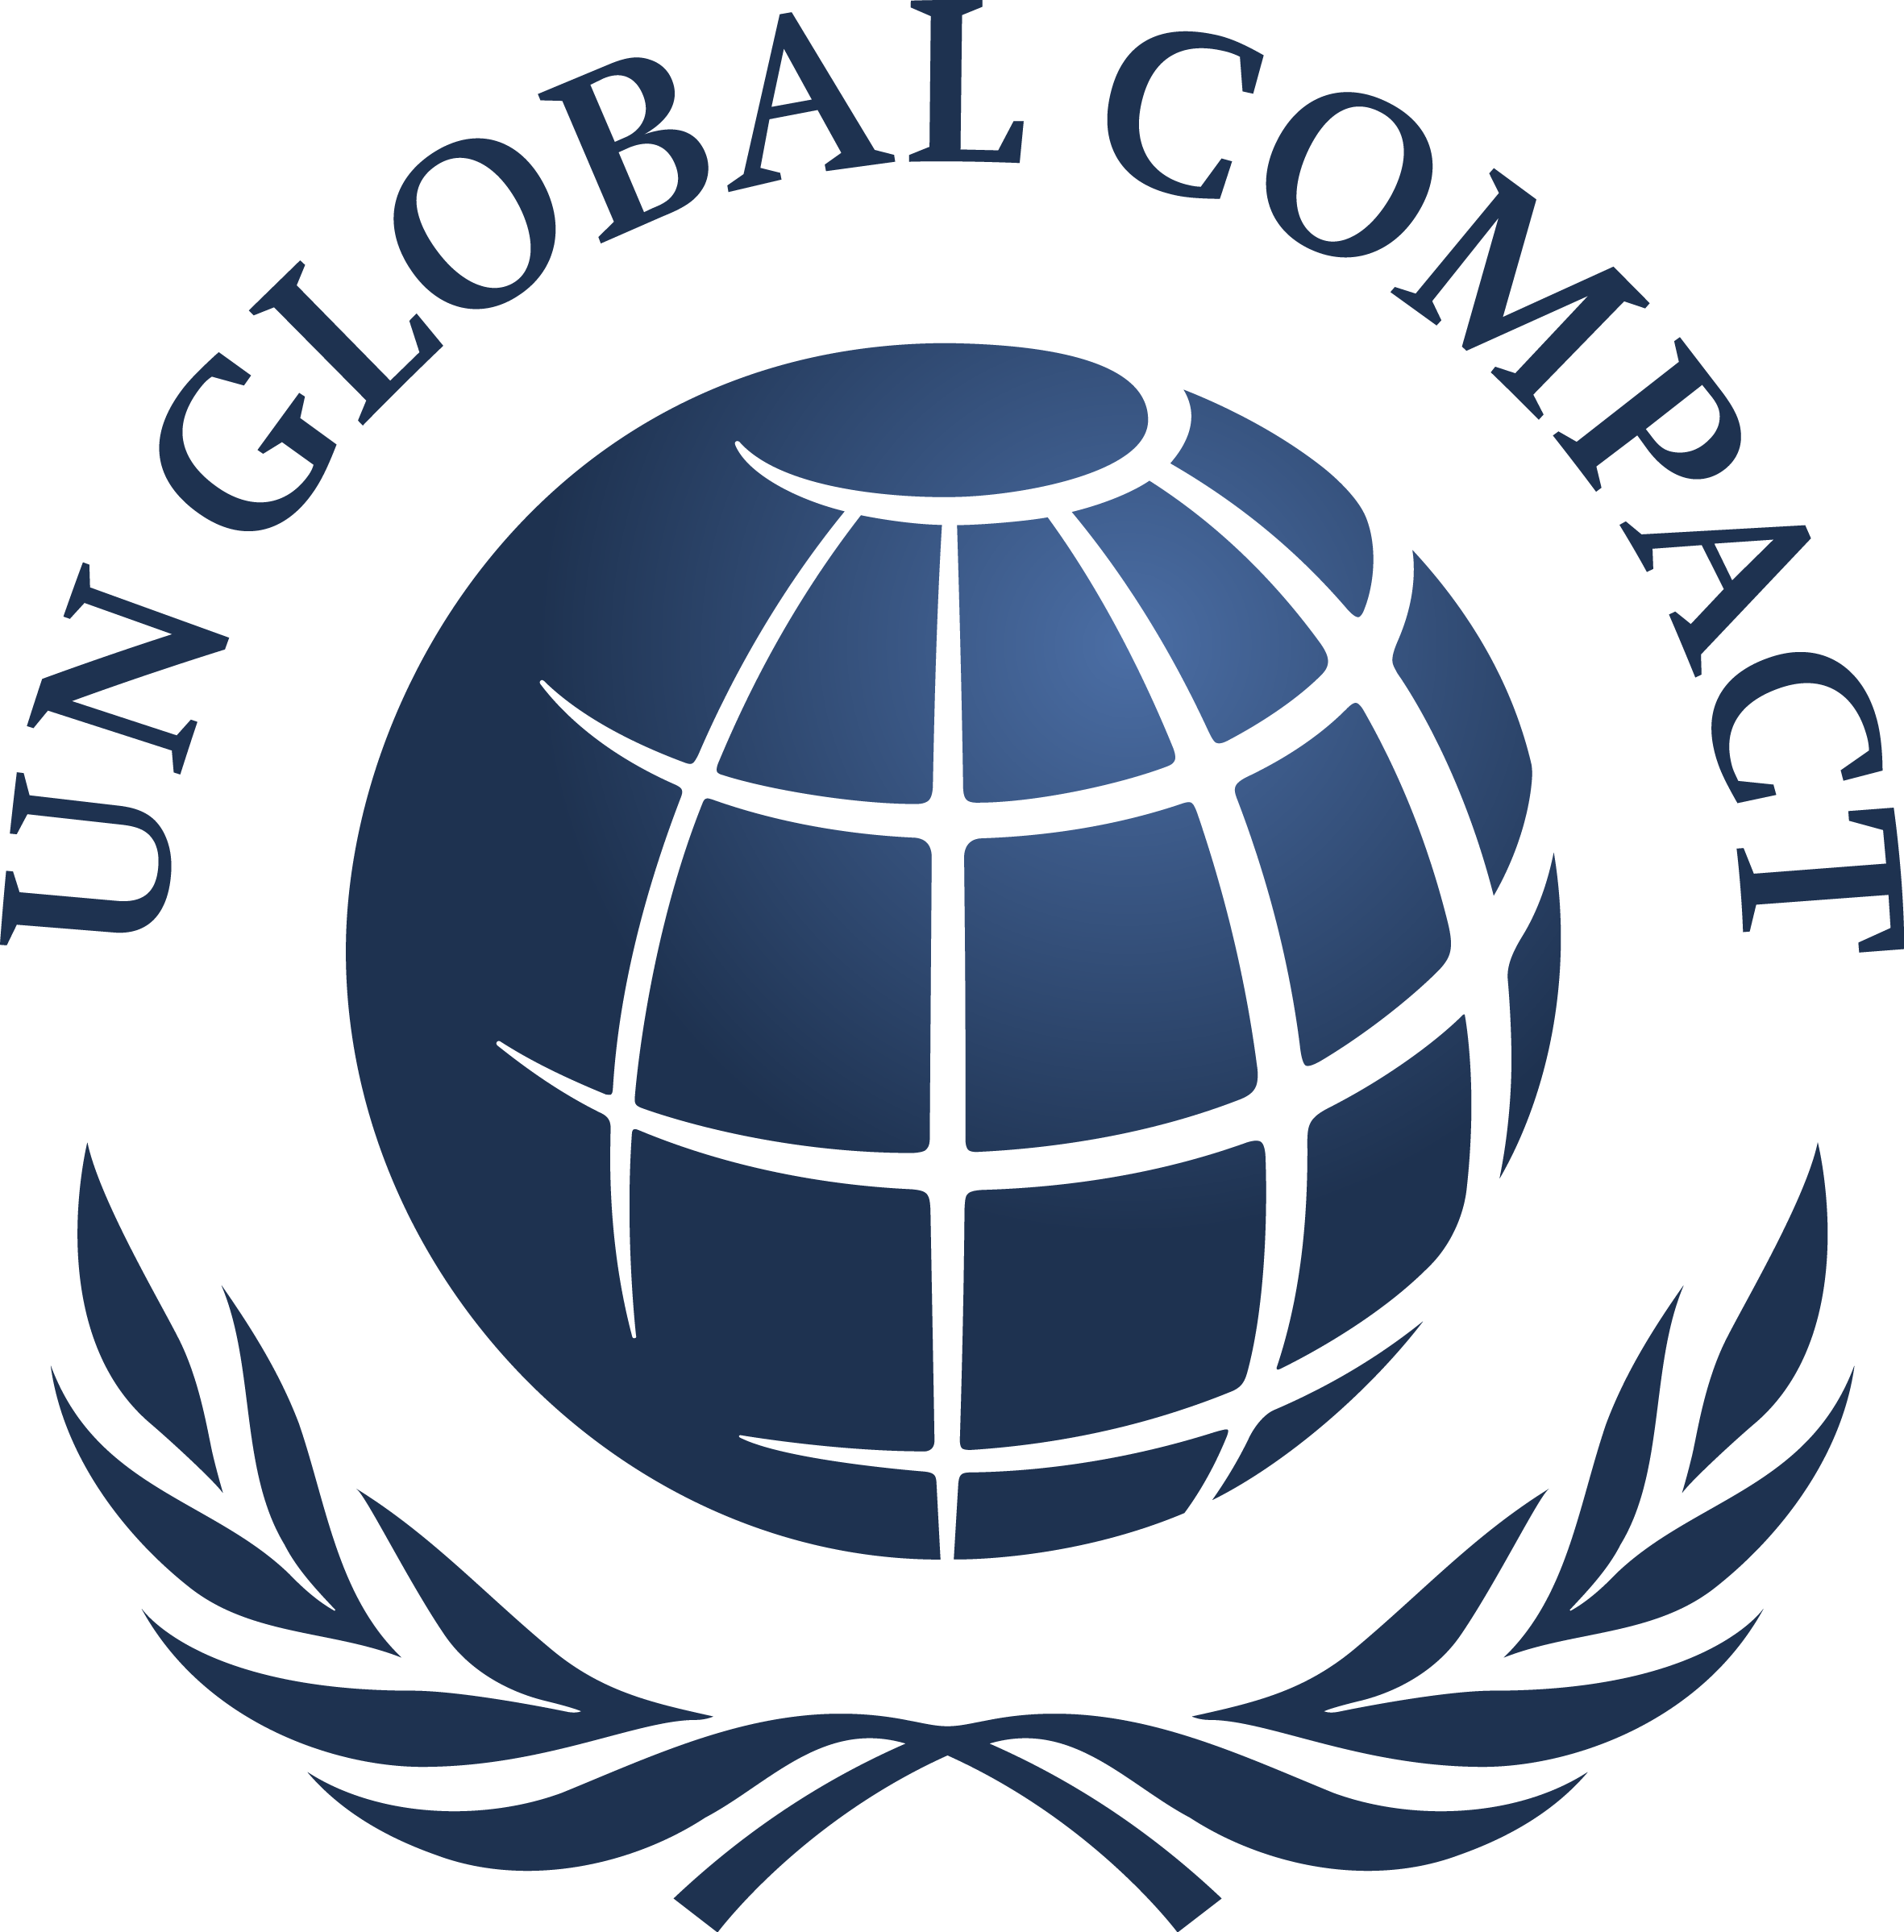 The Global compact logo